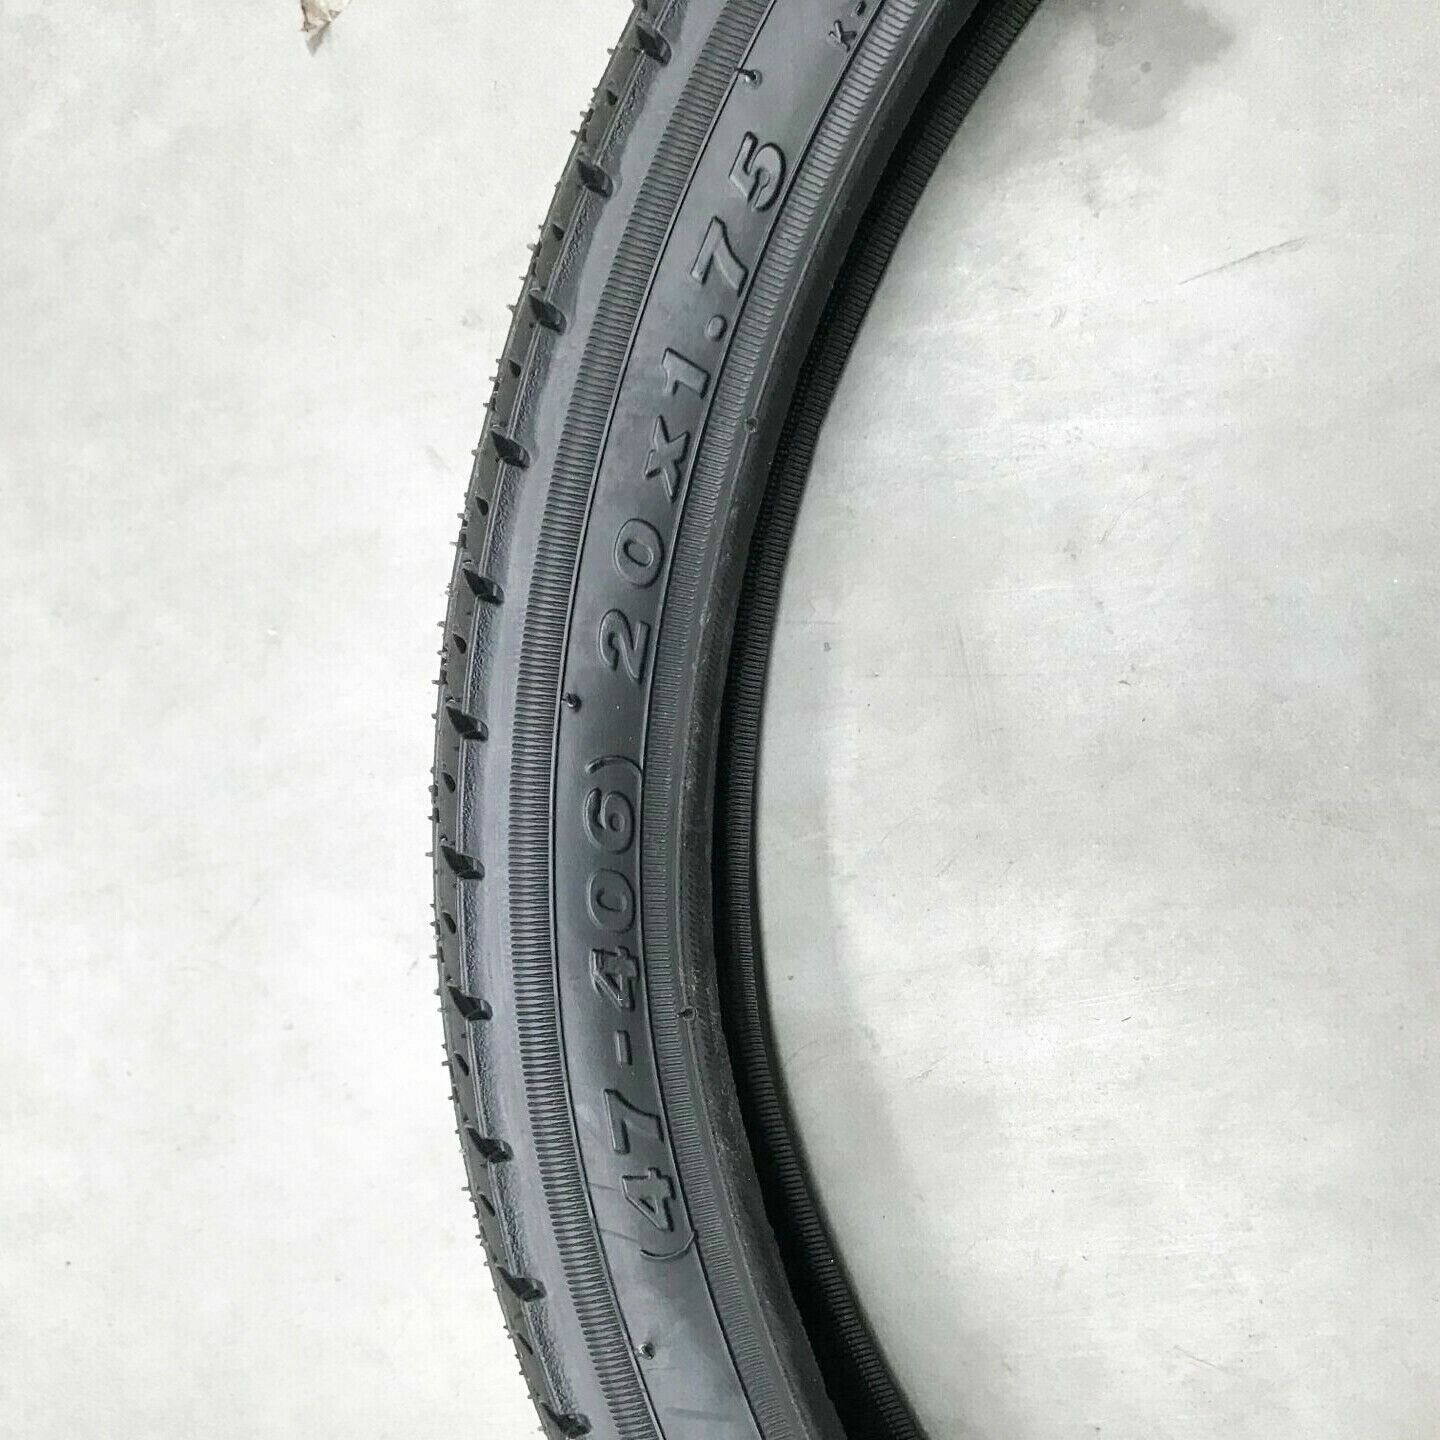 20 Inch 20 x 1.75 Tyre & Tube for Folding Bike Bicycle E-Bike E-Bicycle BMX